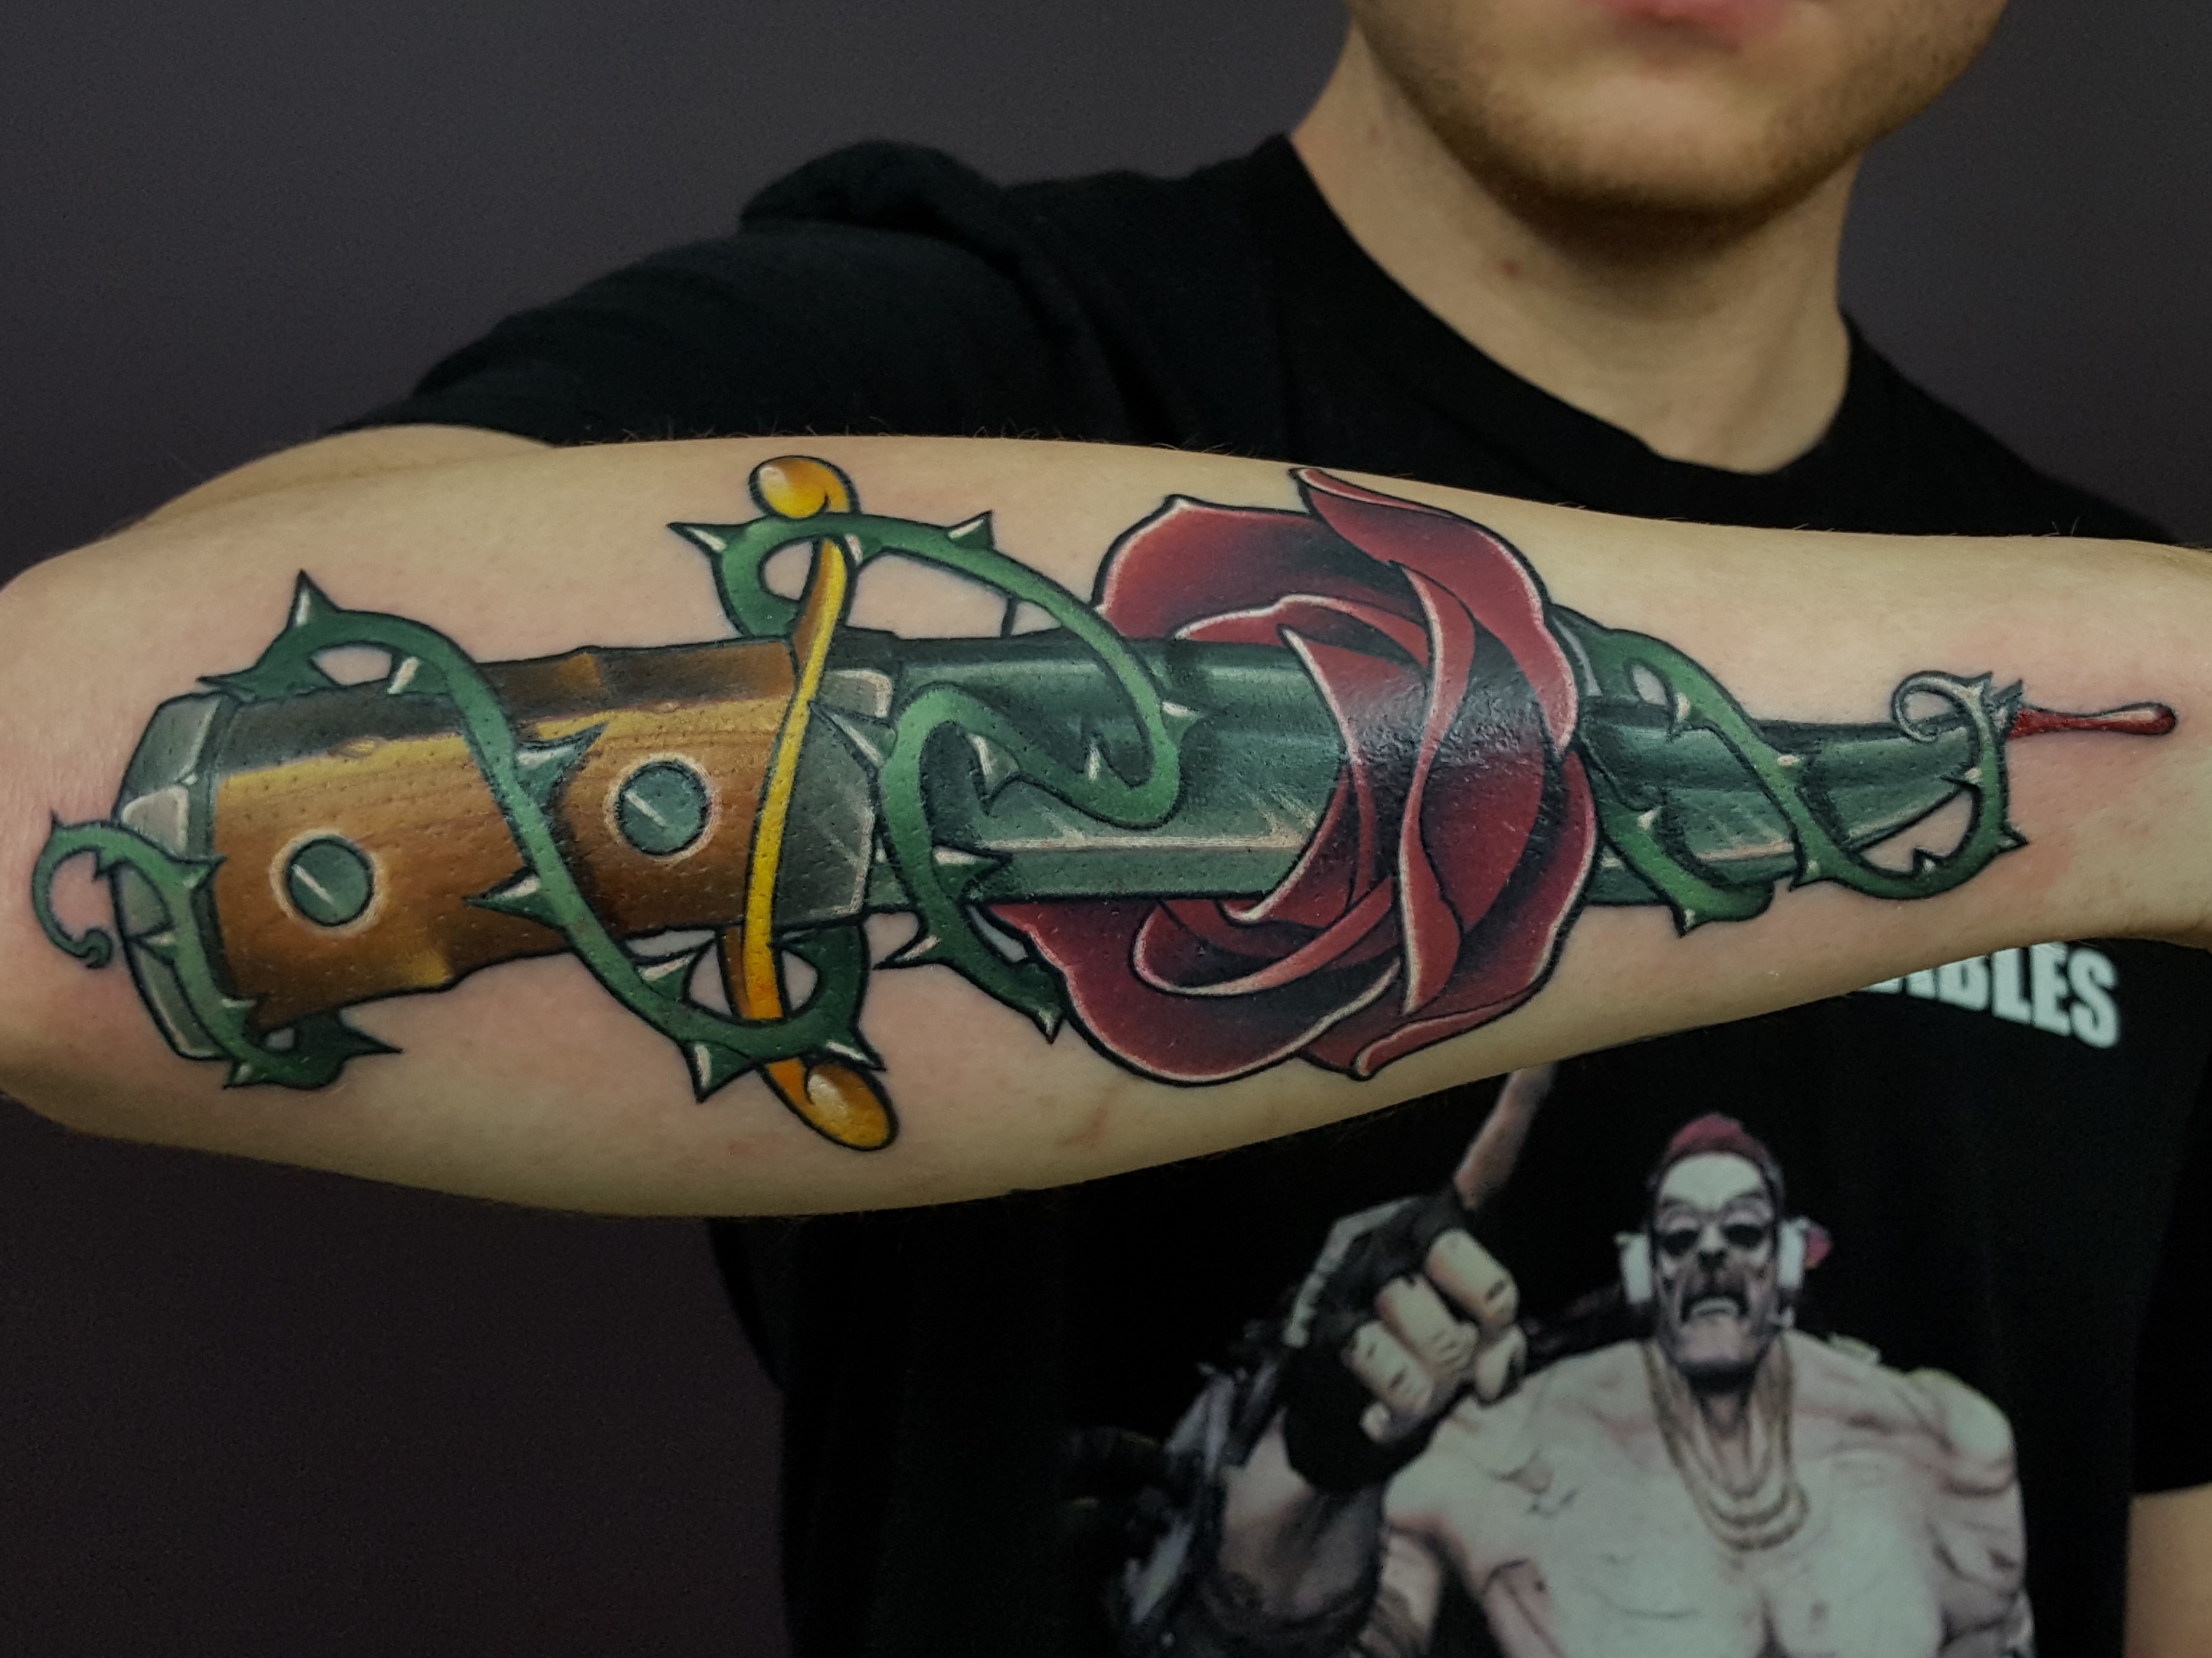 Rose and Dagger Tattoo made by CT tattoo artist Cracker Joe Swider